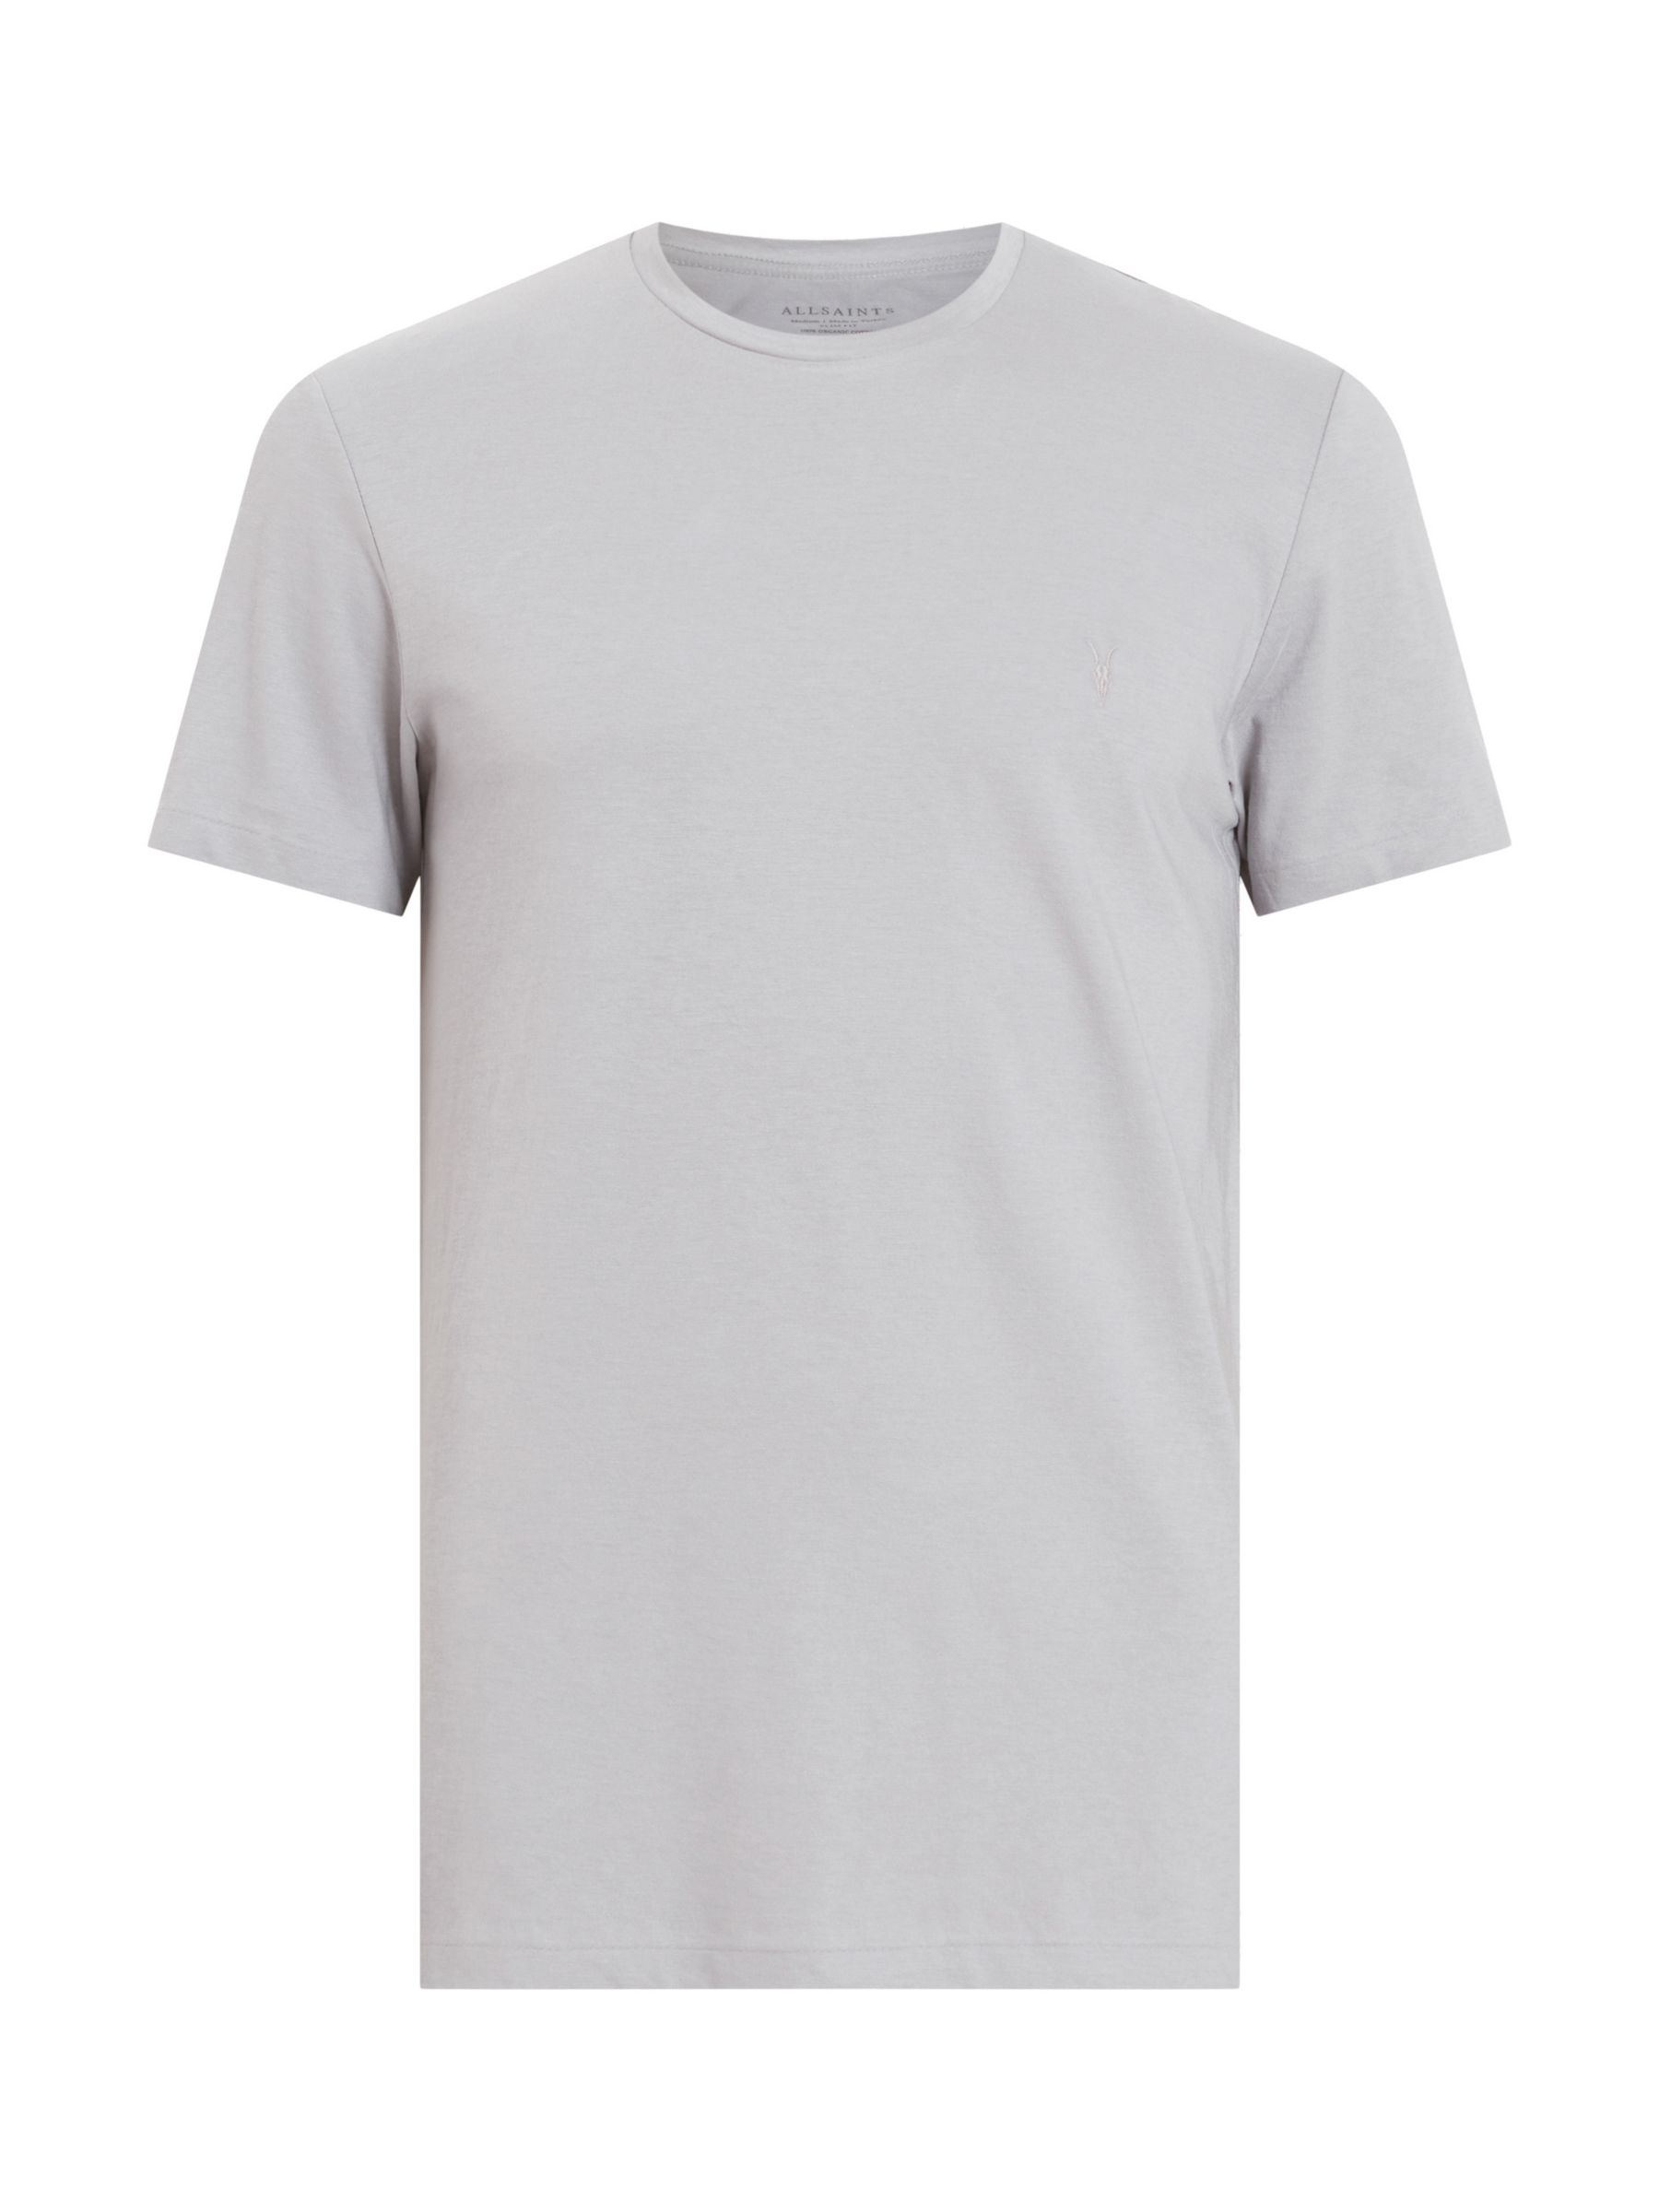 Buy AllSaints Tonic Crew Neck T-Shirt Online at johnlewis.com